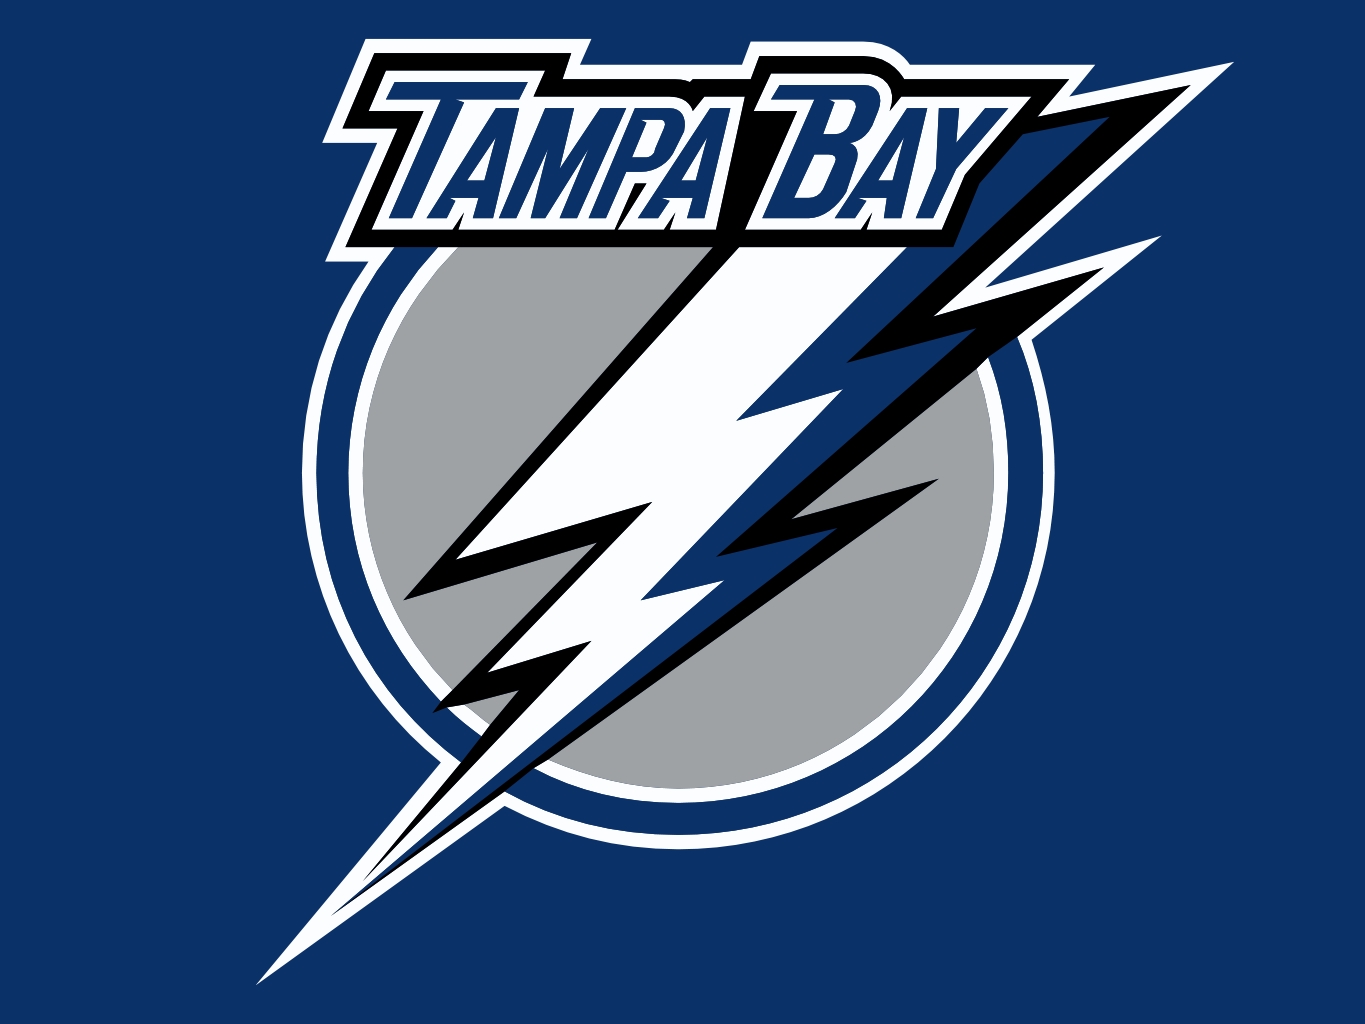 Seriously! 43+ Reasons for Tampa Bay Lightning Wallpaper 4K! We've